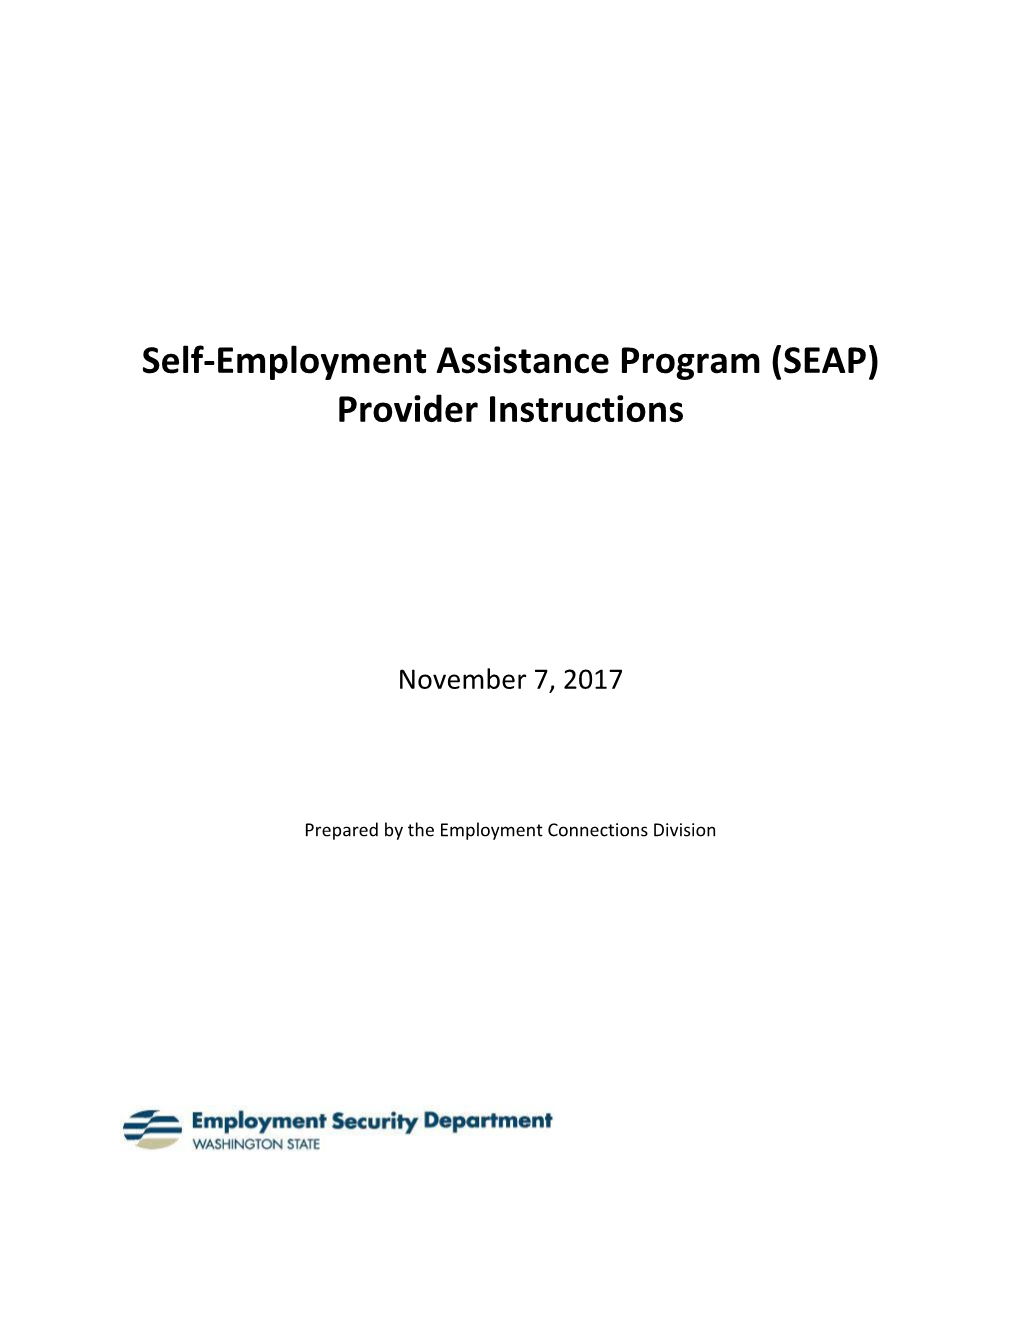 Self-Employment Assistance Program (SEAP) Provider Instructions